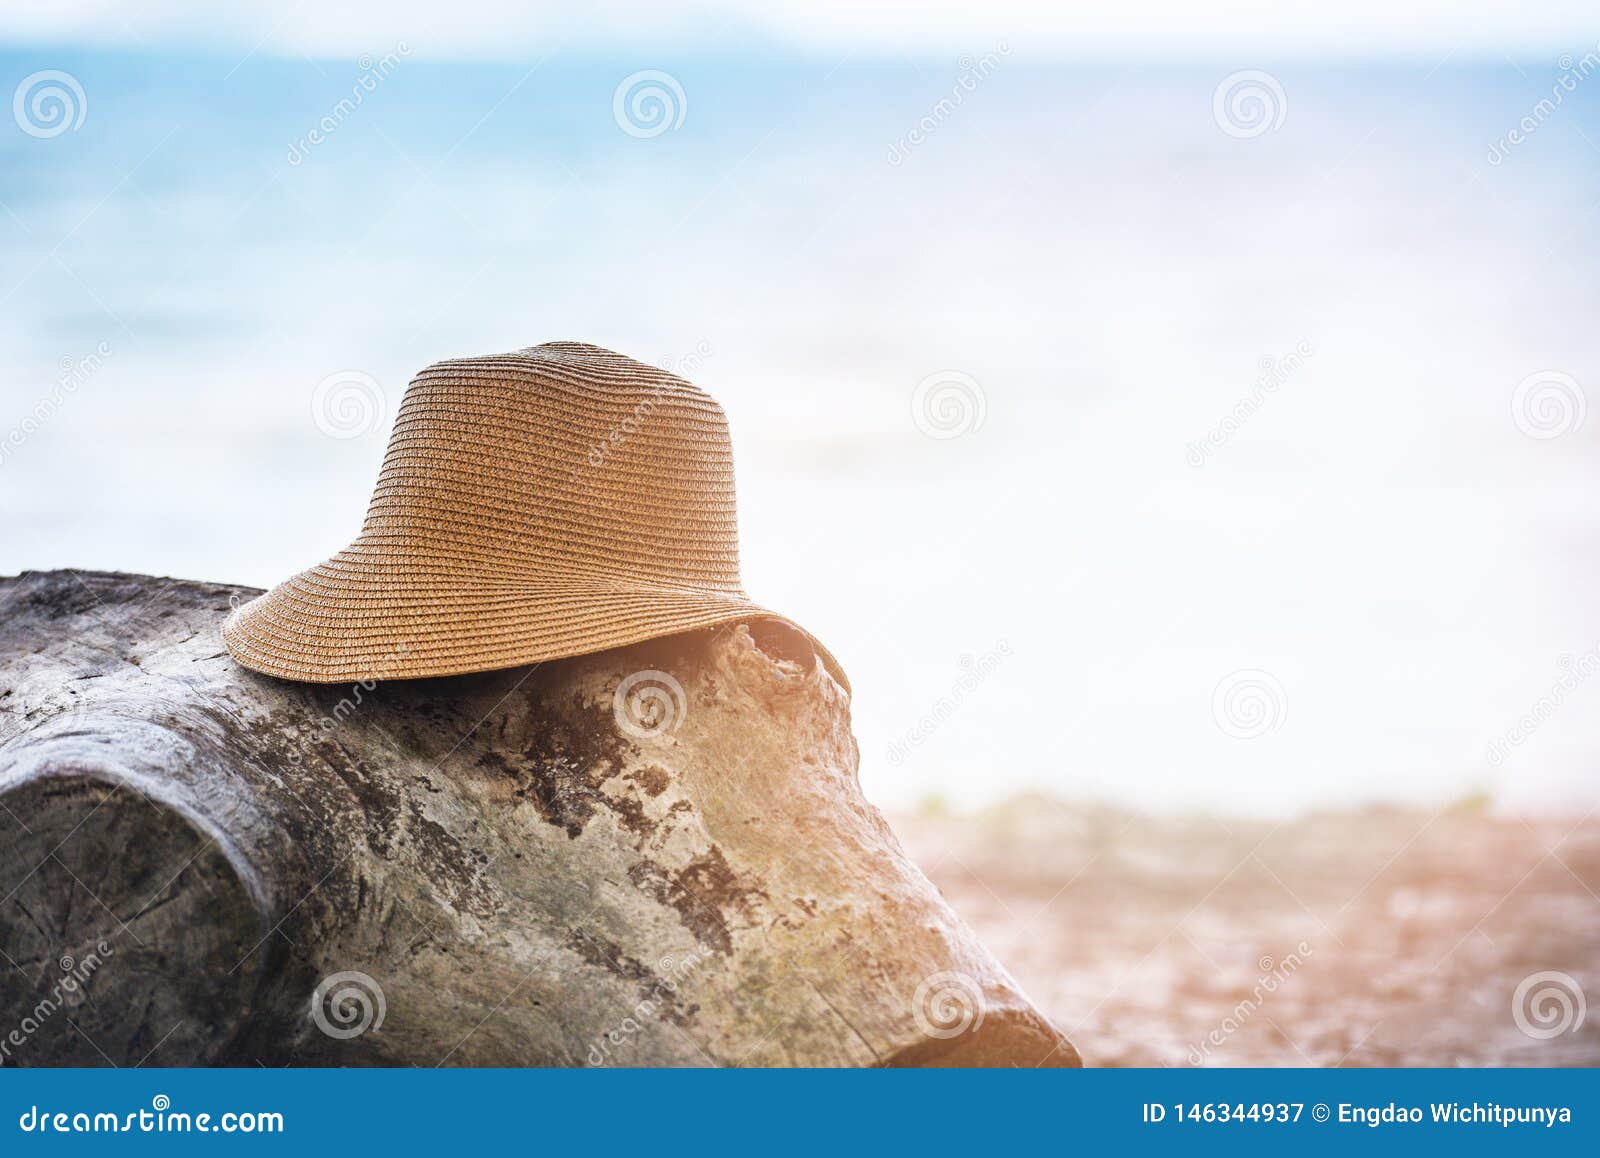 hat summer straw hat fasion on log at beach sea background